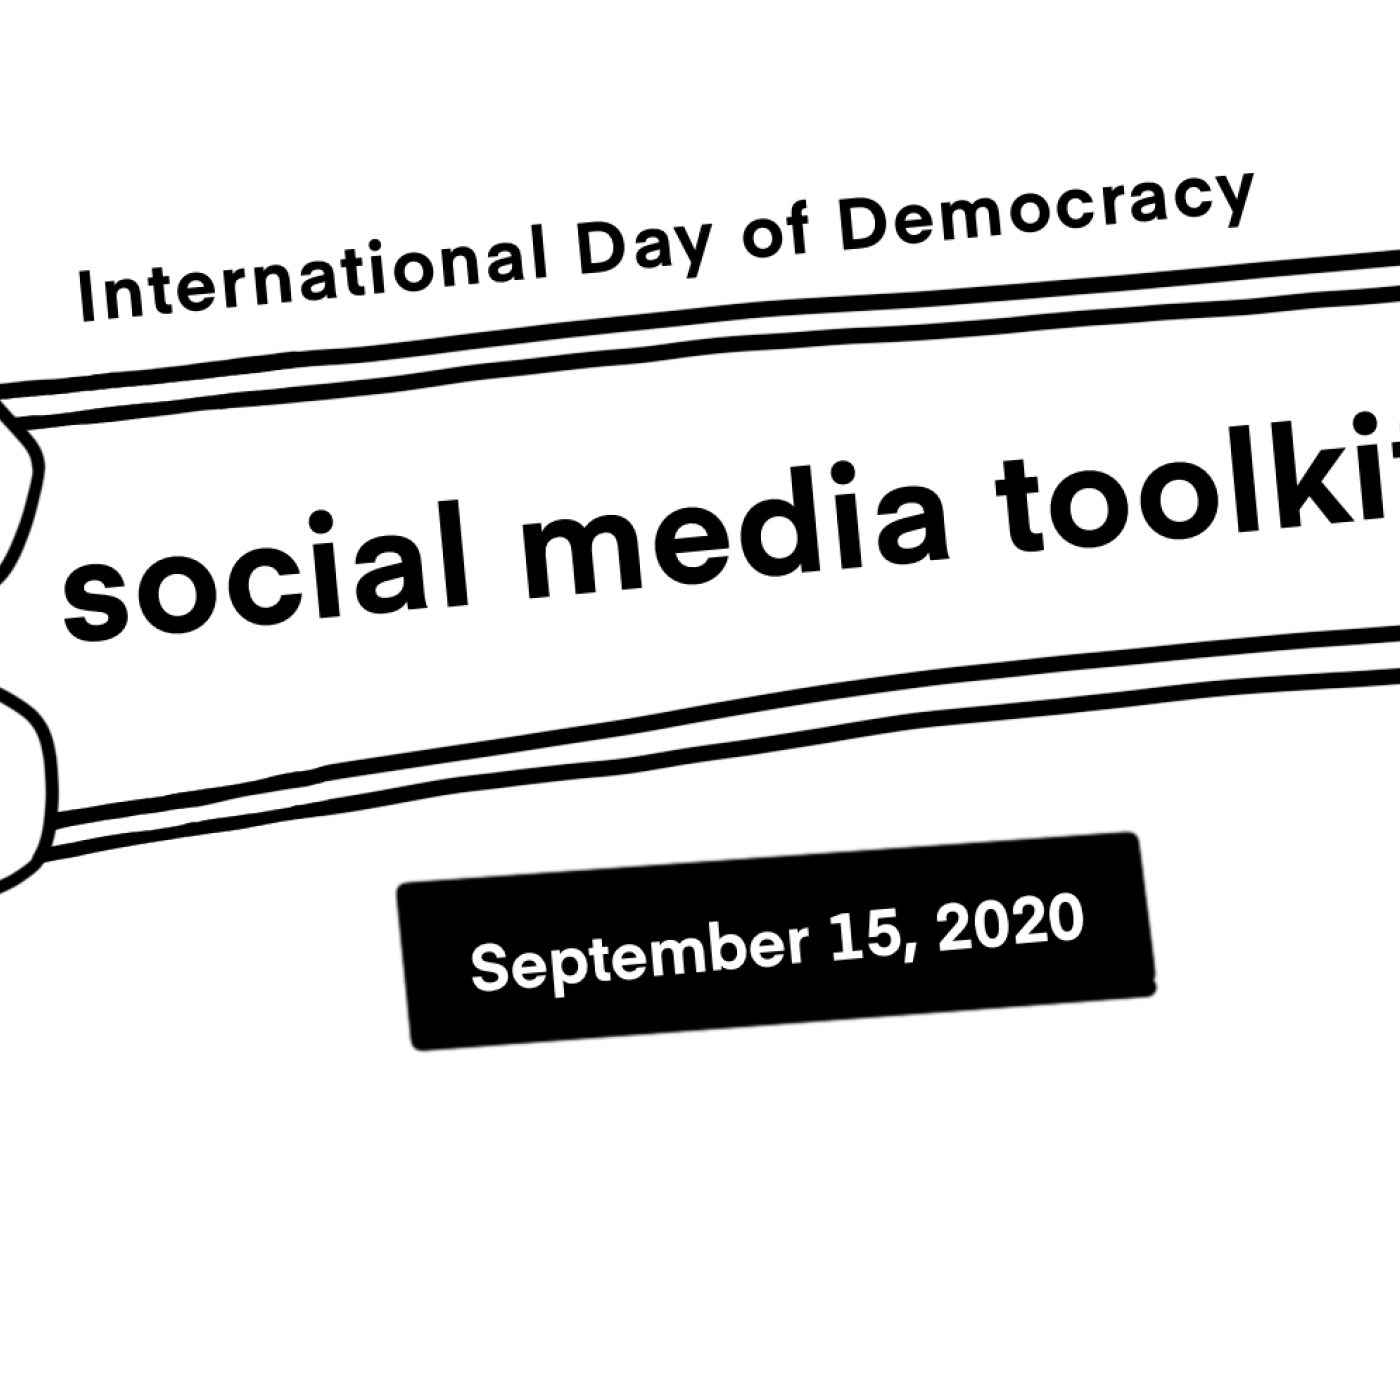 International Day of Democracy | social media toolkit | September 15, 2020